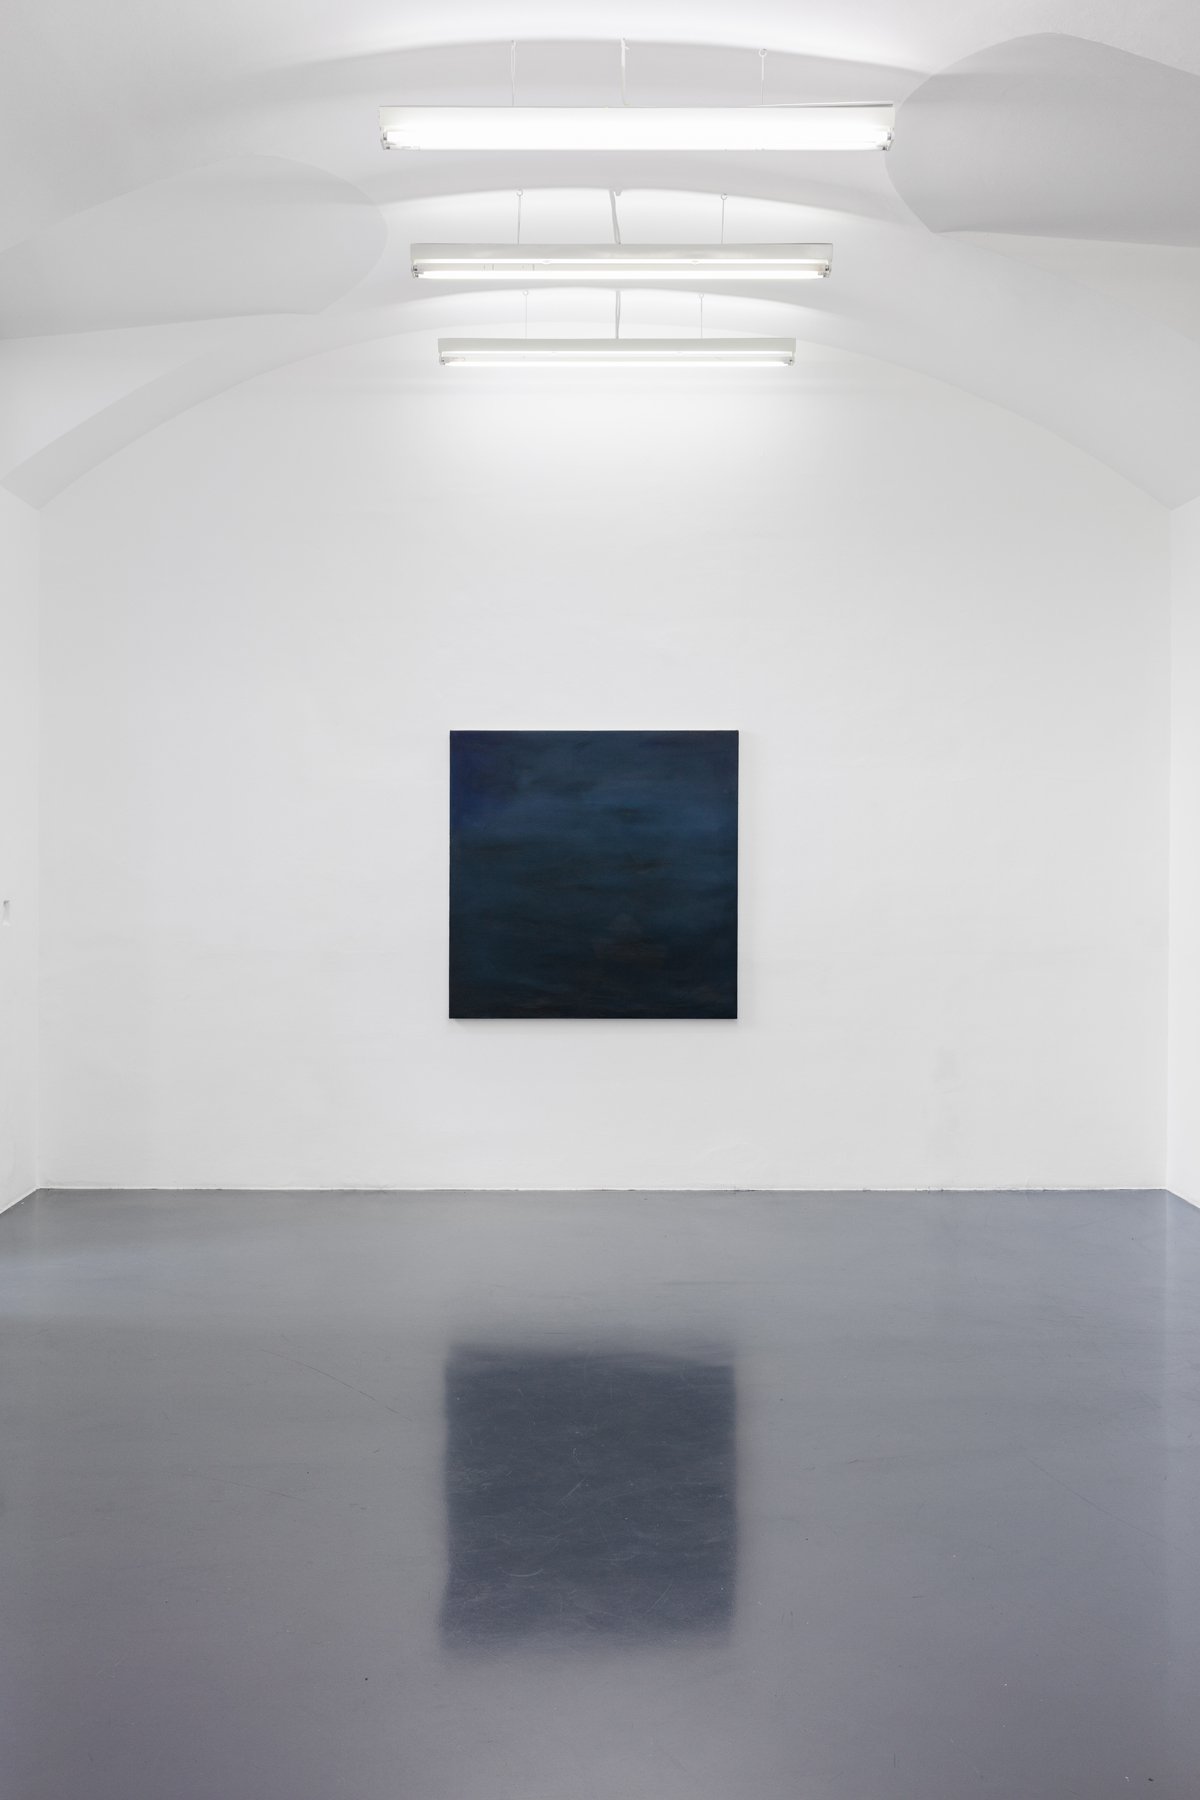 Dominique KnowlesBreak the Smoke in Deep, 2016-2020Oil on canvas132.1 x 132.1 cm